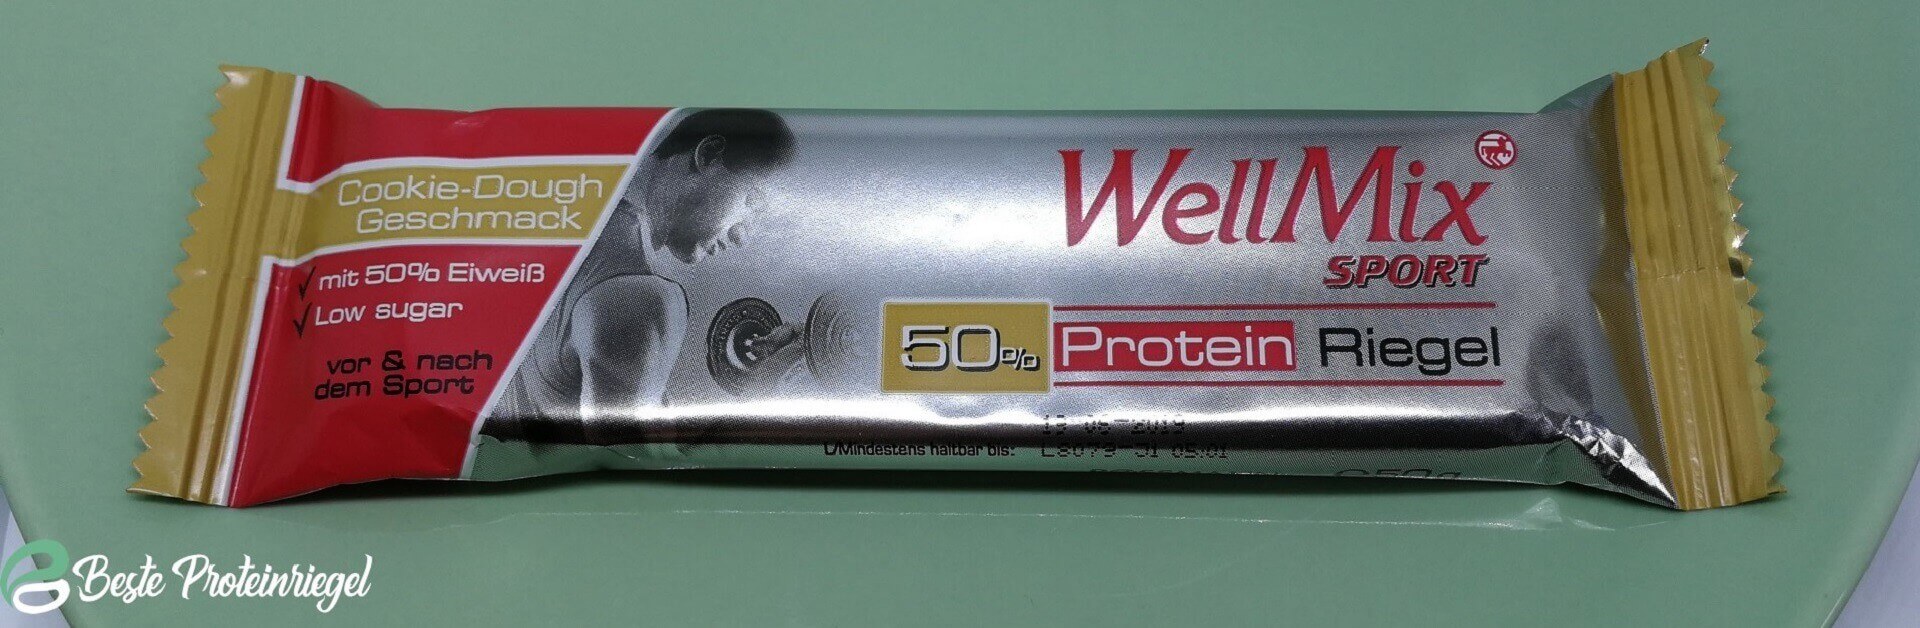 WellMix 50% Verpackung